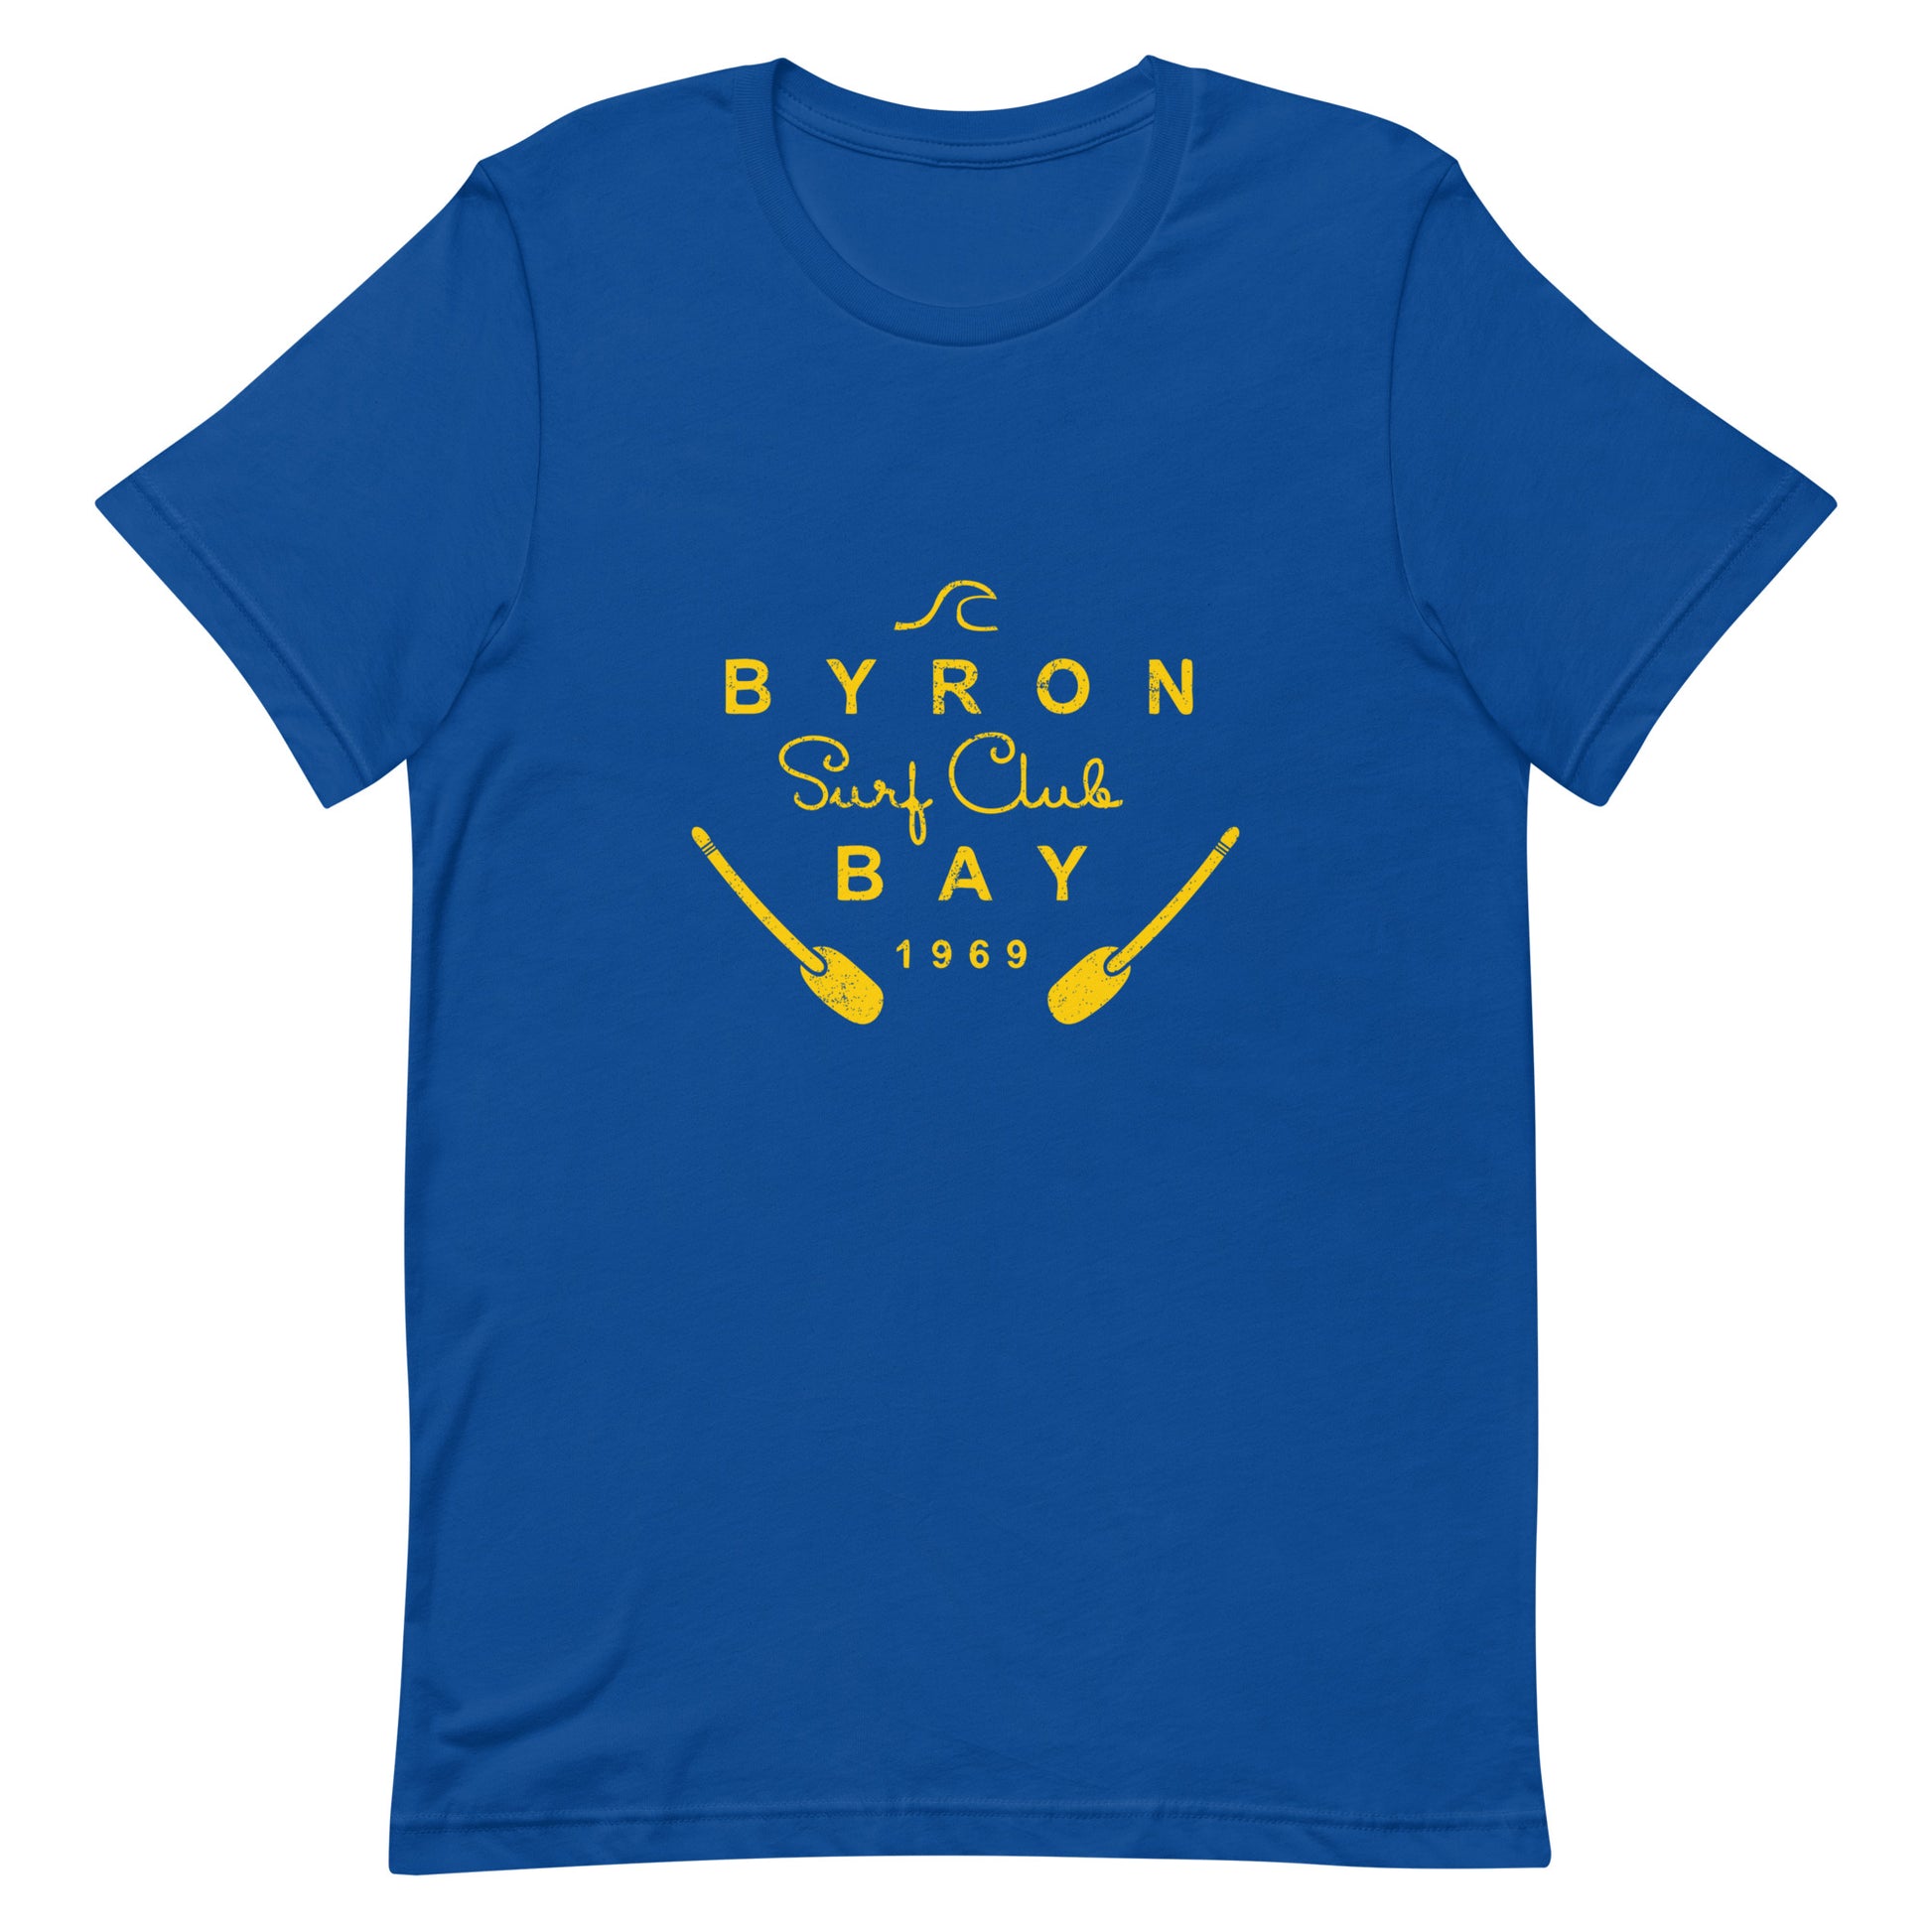  Unisex T-Shirt - True Royal Blue - Front flat lay view - yellow Byron Bay Surf Club logo on front - Genuine Byron Bay Merchandise | Produced by Go Sea Kayak Byron Bay 